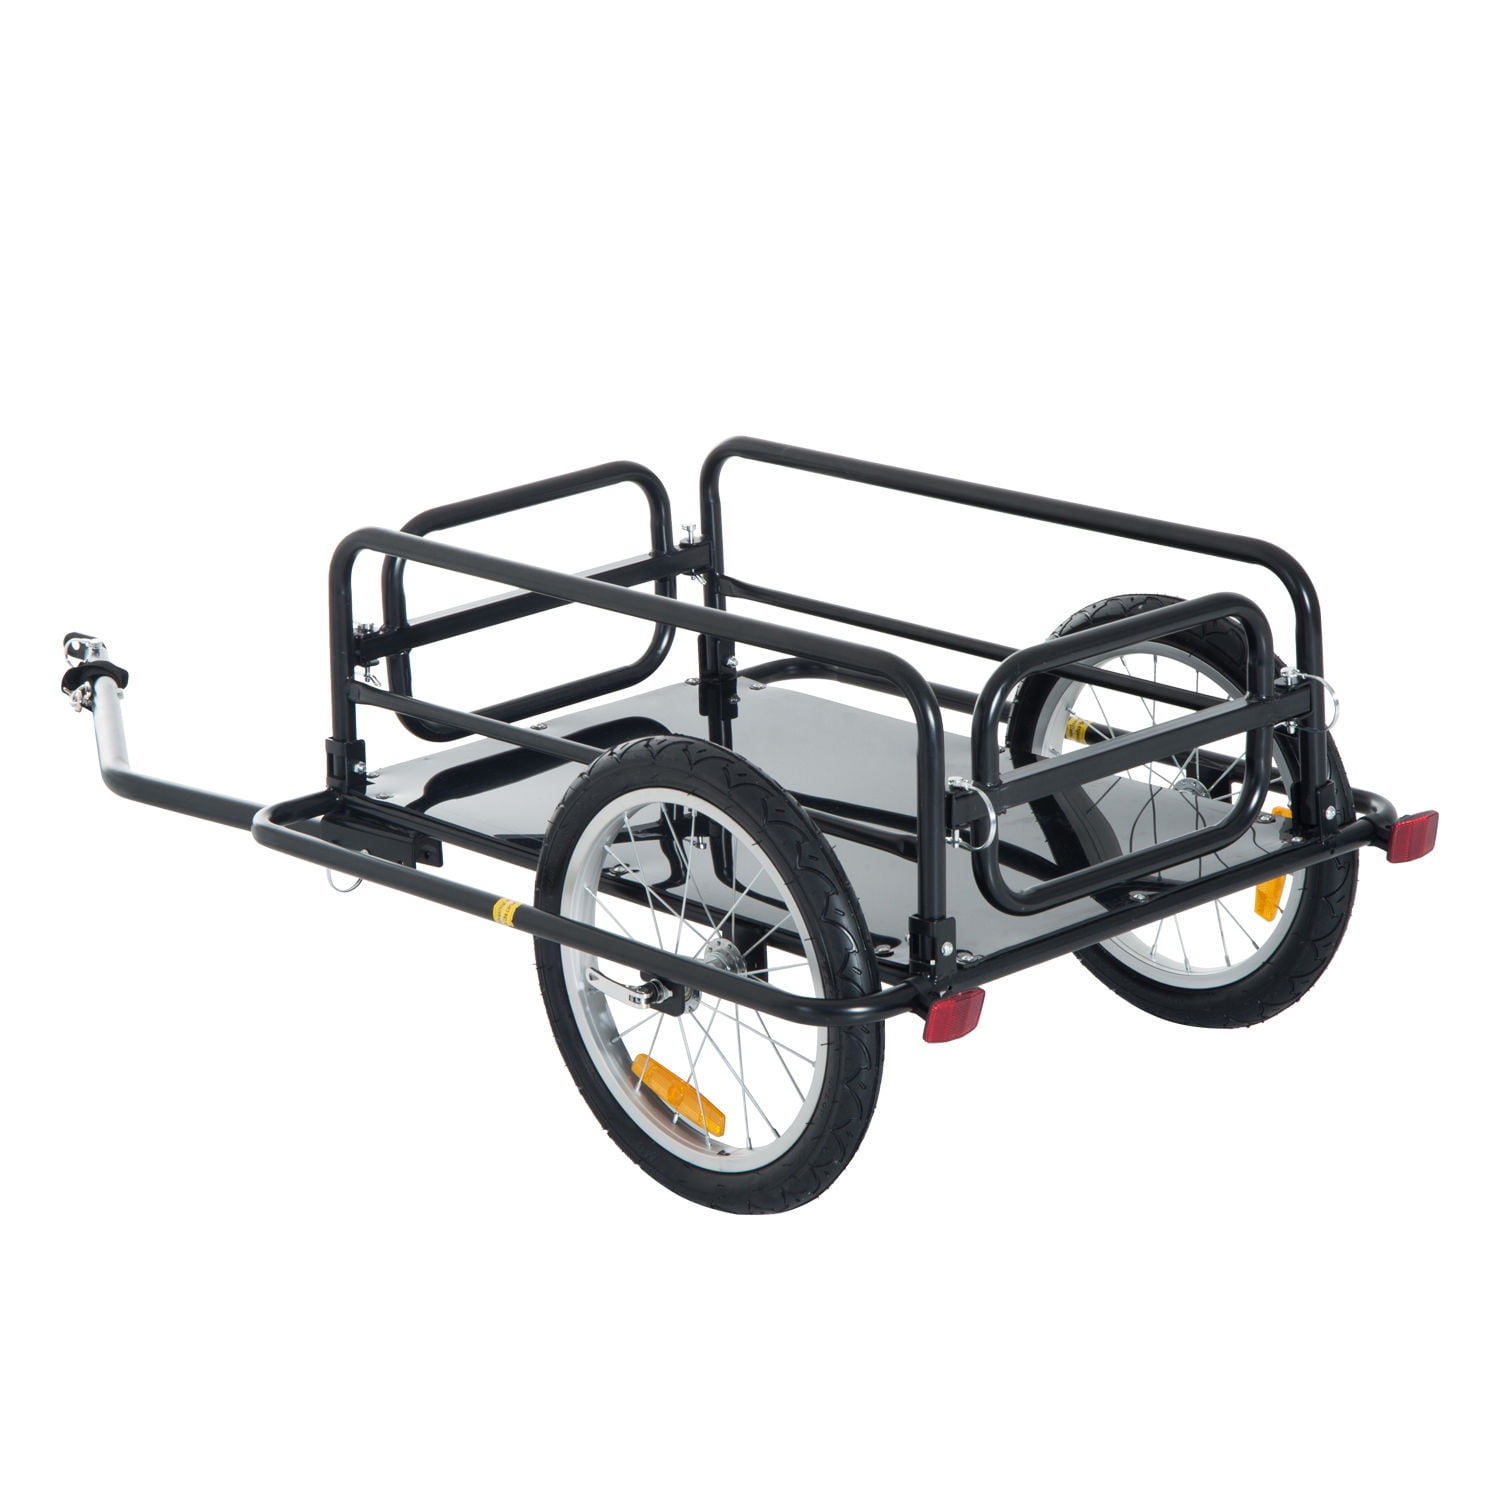 Neature Bike Trailer Utility Cart and Bike Trailer Attachment Kit 88lb Capacity Towable Bike Cargo Wagon for Travel 